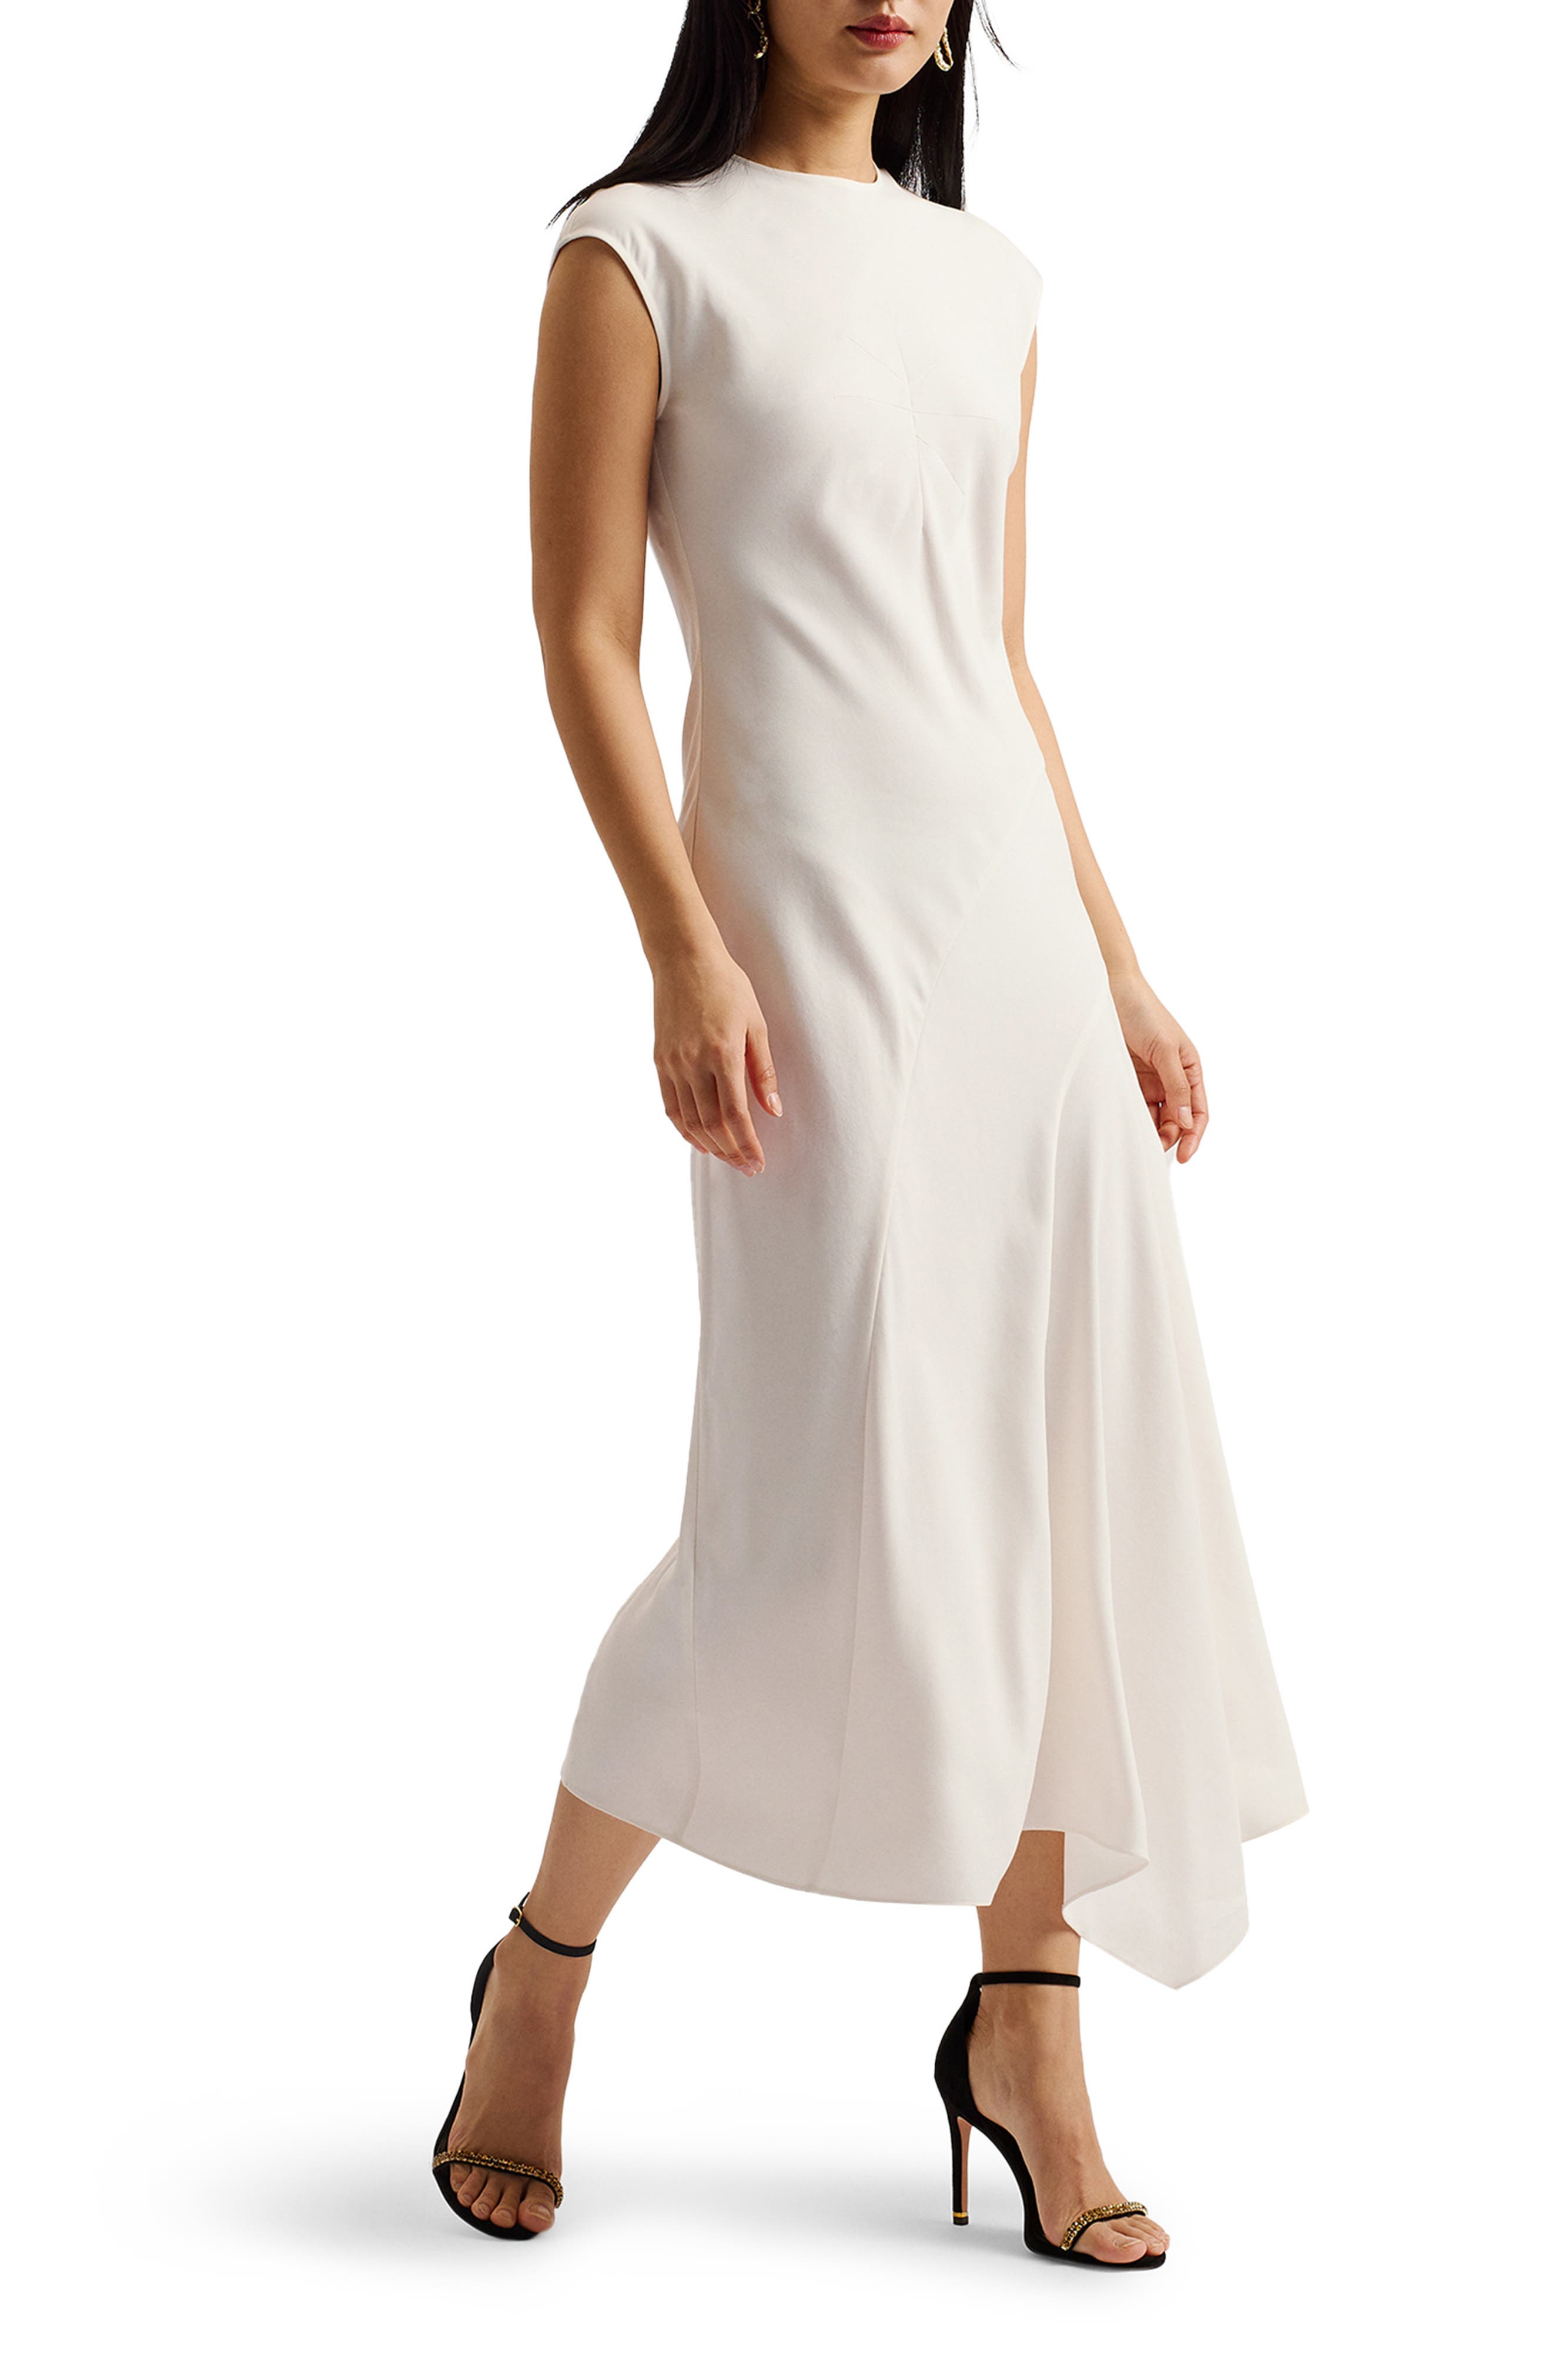 white aline dress